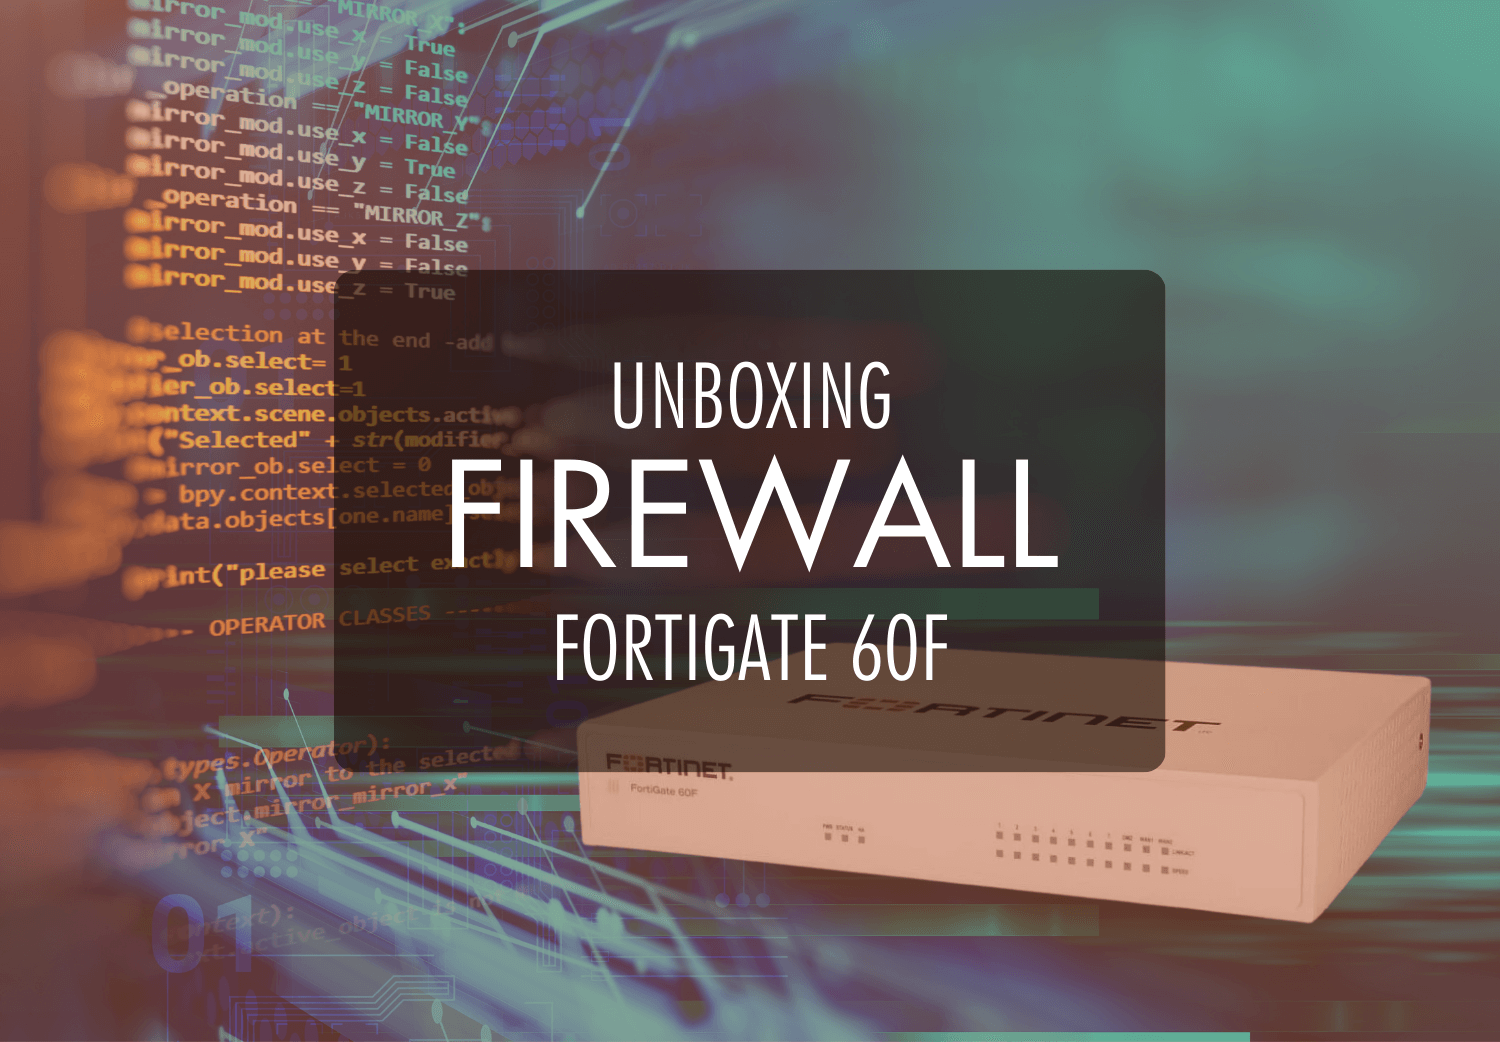 UNBOXING FIREWALL FORTIGATE 60F